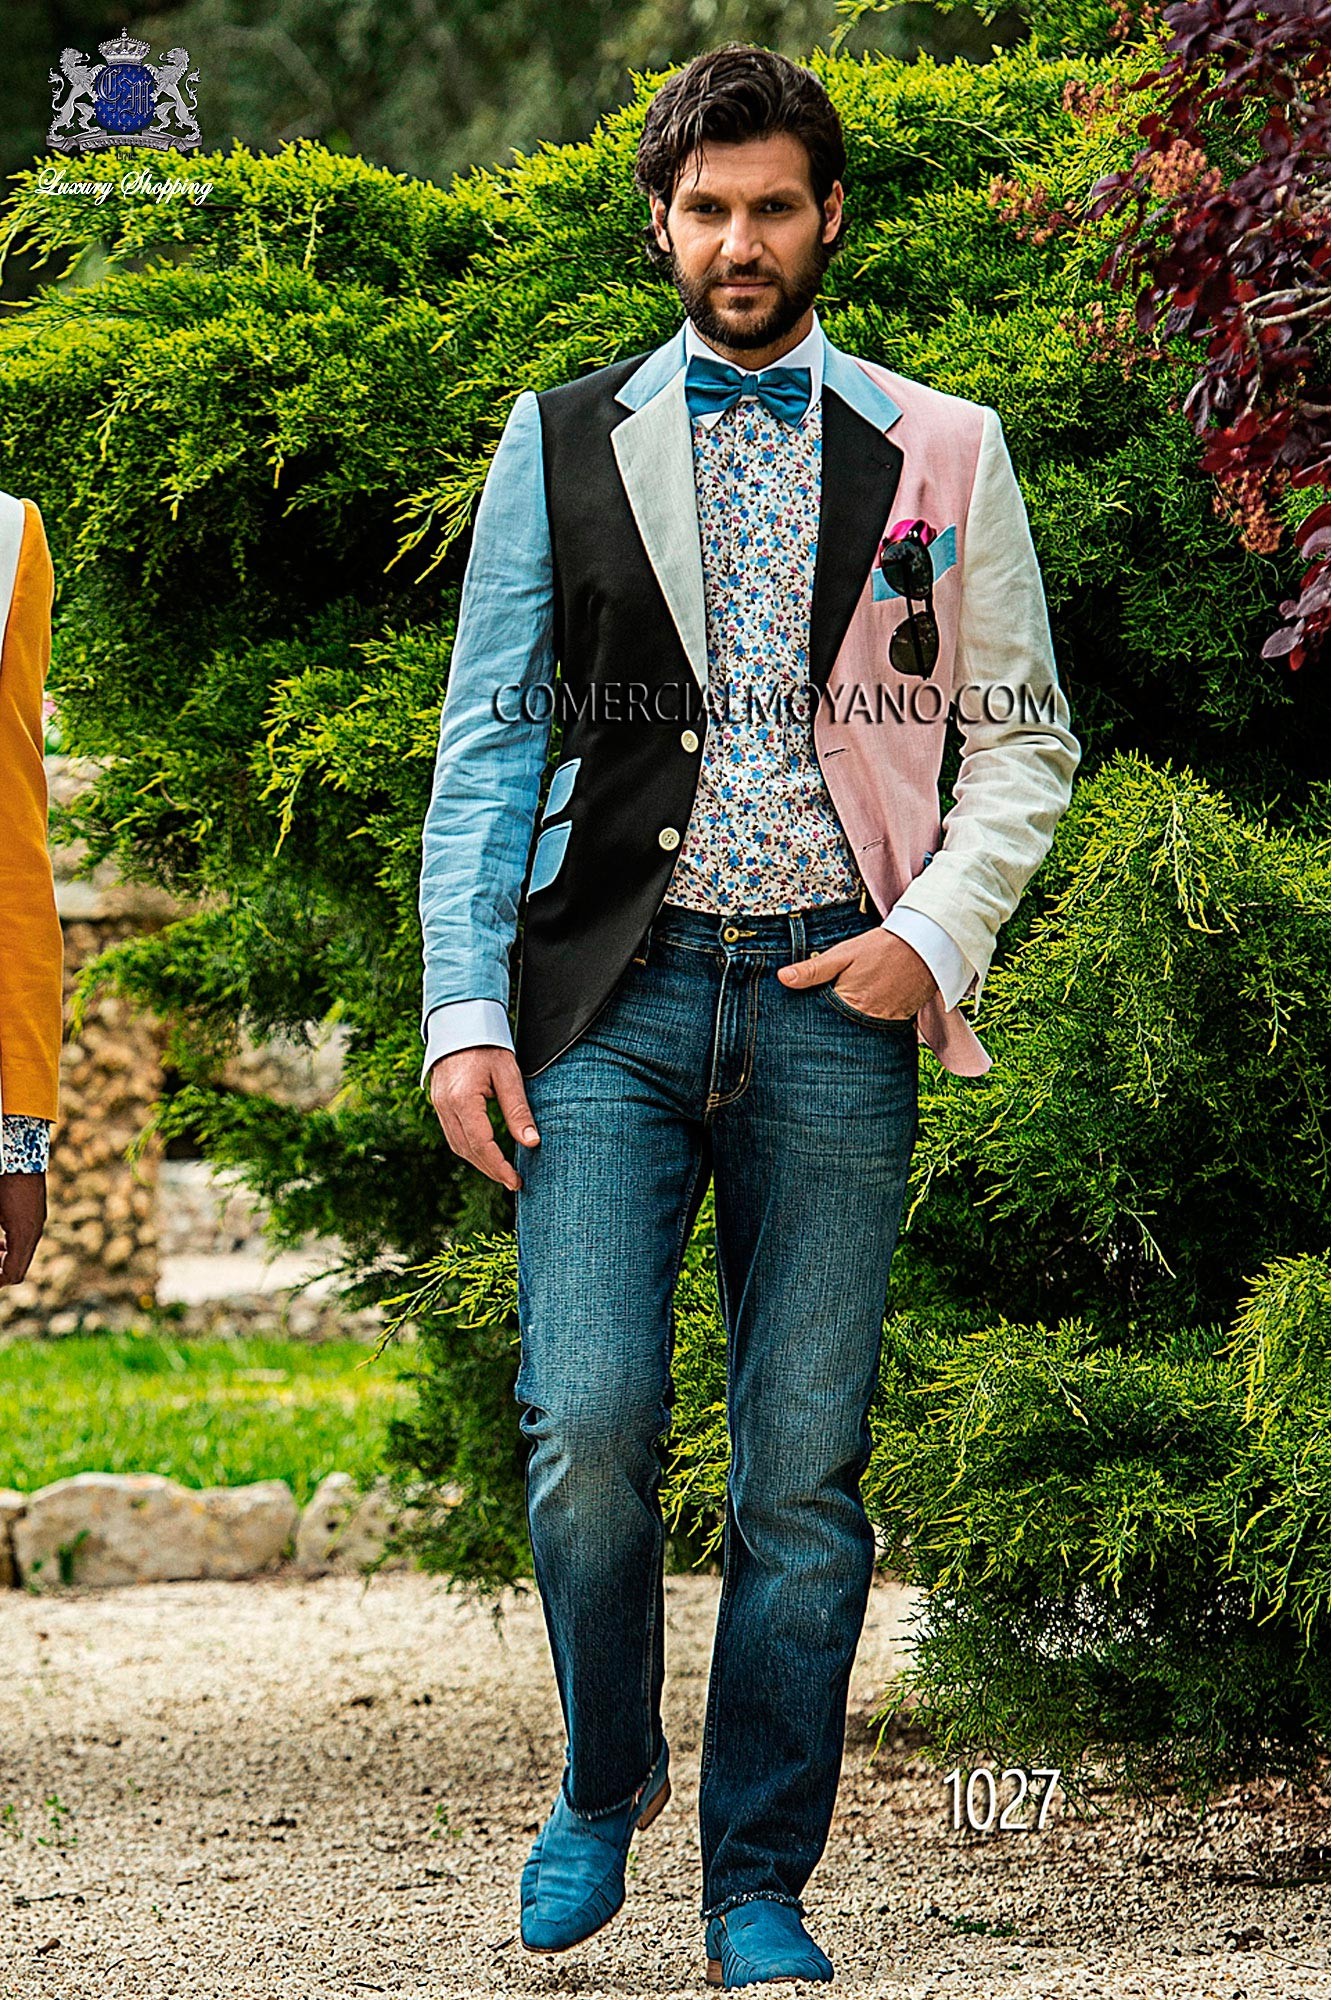 Hipster pink/black men wedding suit model 1027 Mario Moyano